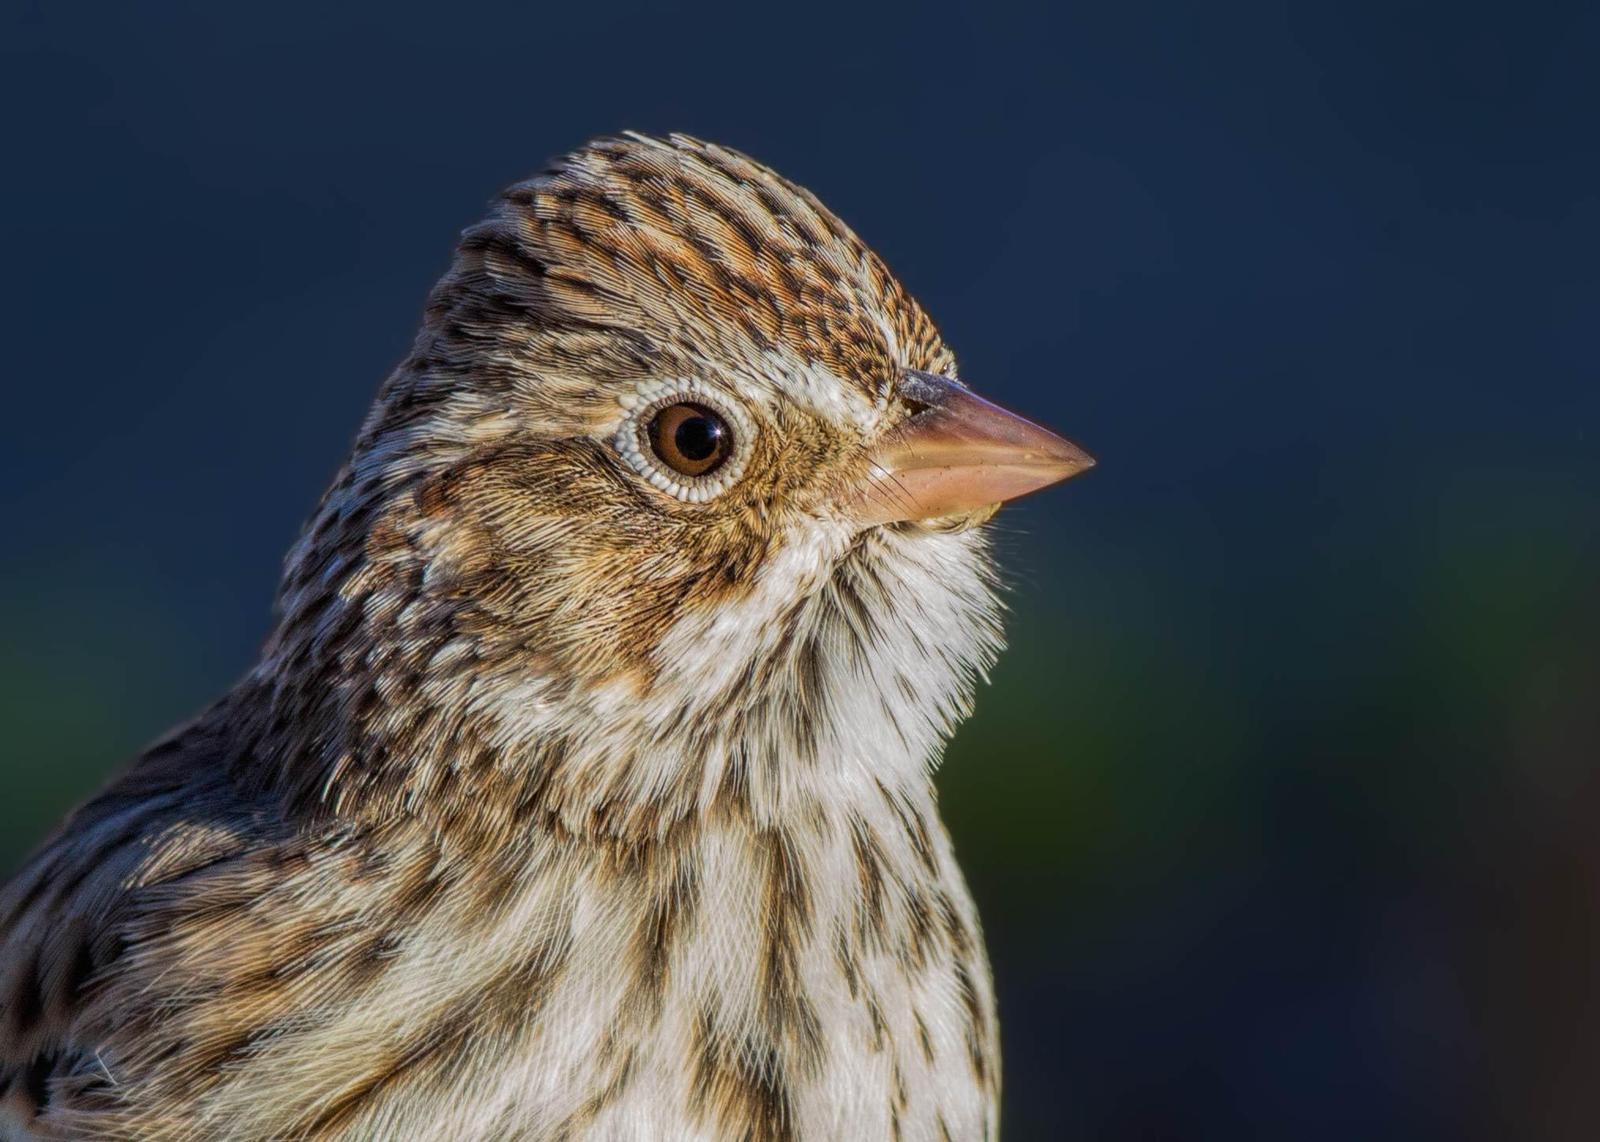 Vesper Sparrow Photo by Jeff Schwilk